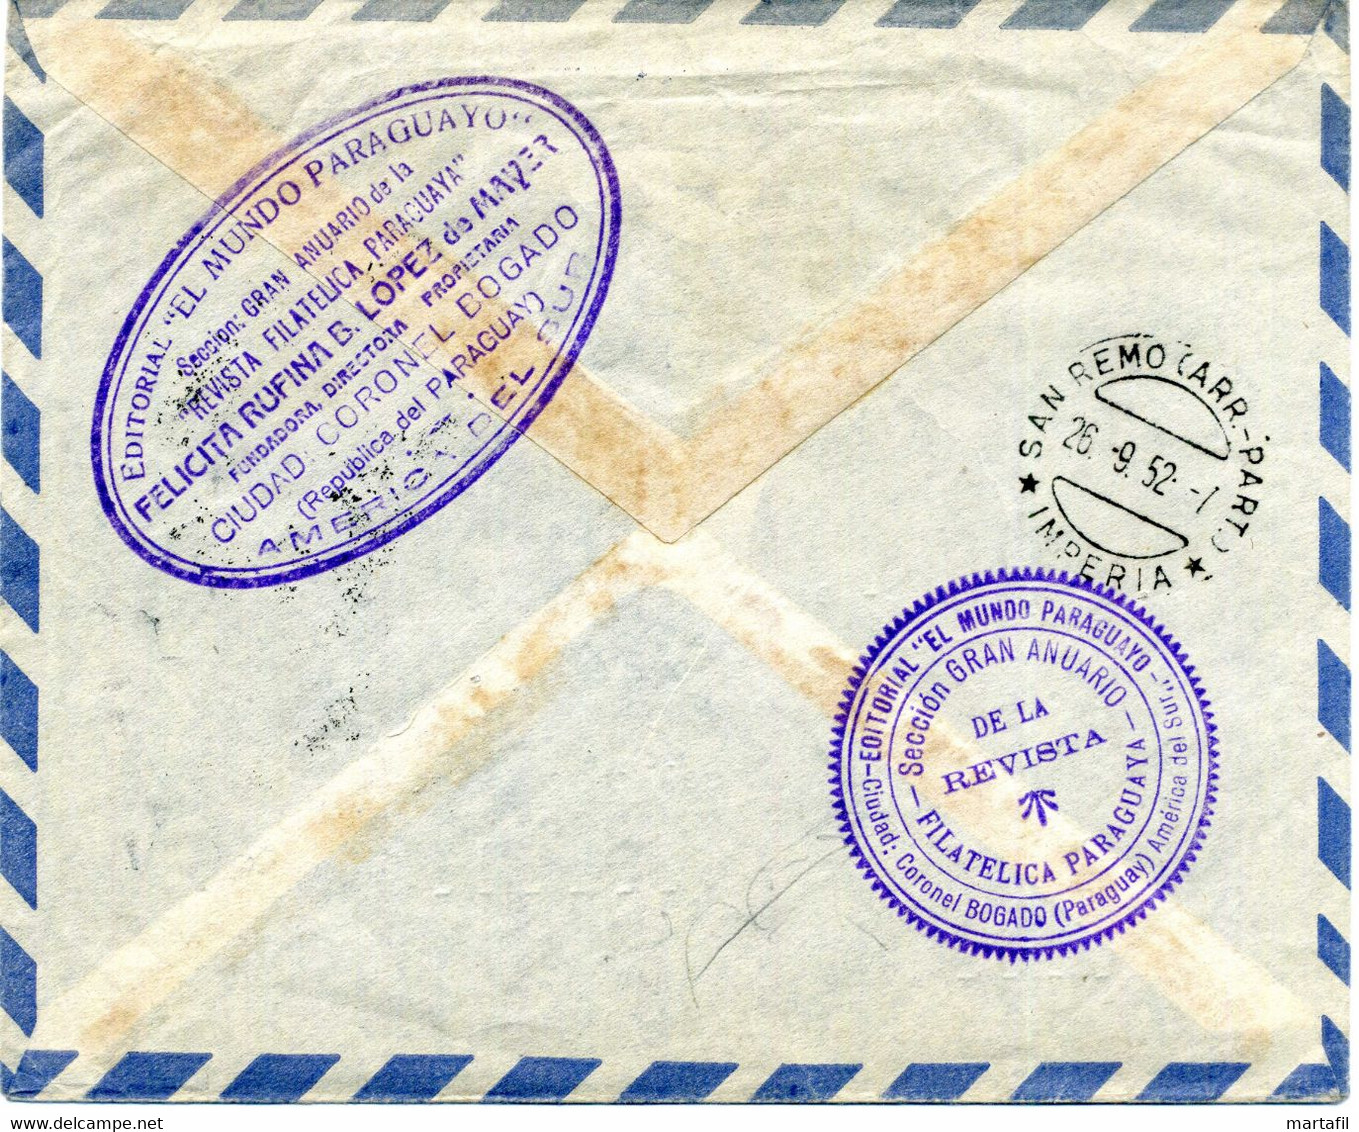 1952 Busta VIA AEREA SAN REMO Società Filatelica COSTA D'ORO / Editoral "EL MUNDO PARAGUAYO" PARAGUAY - Correo Aéreo